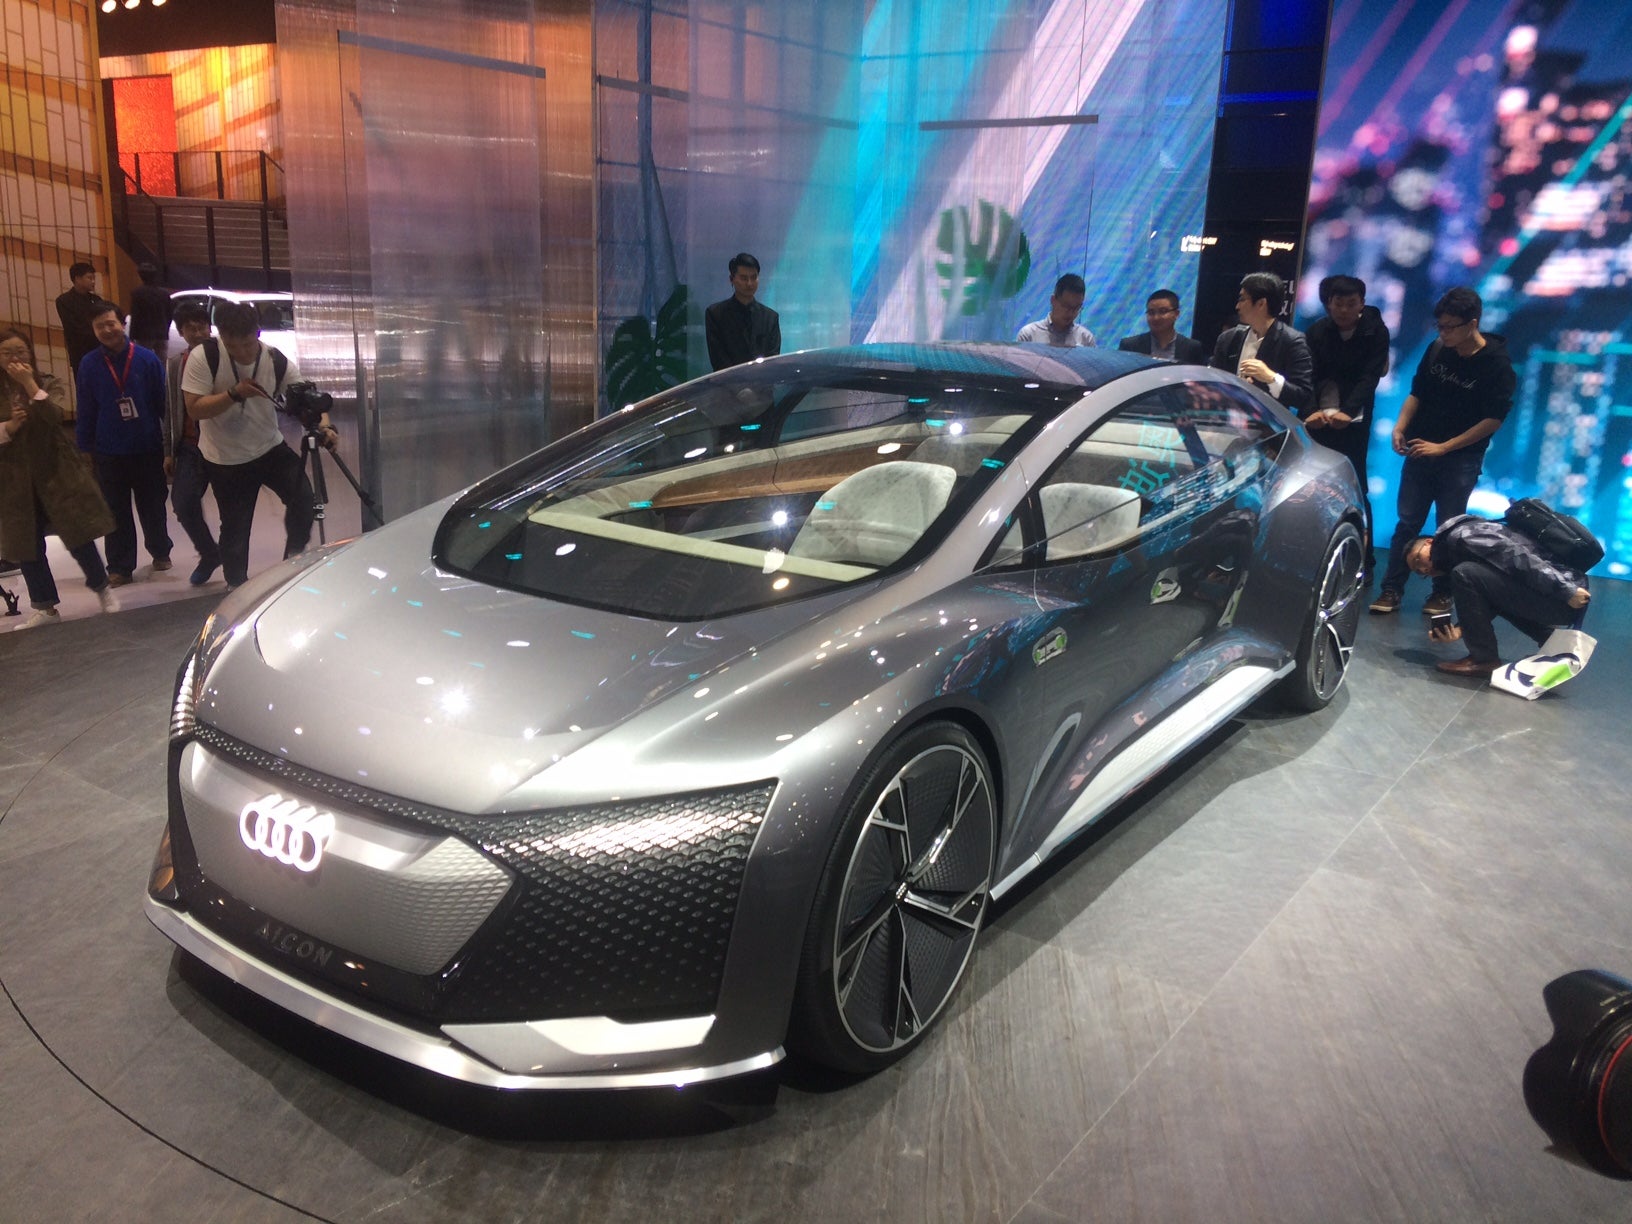 Audi unveils its new electric car